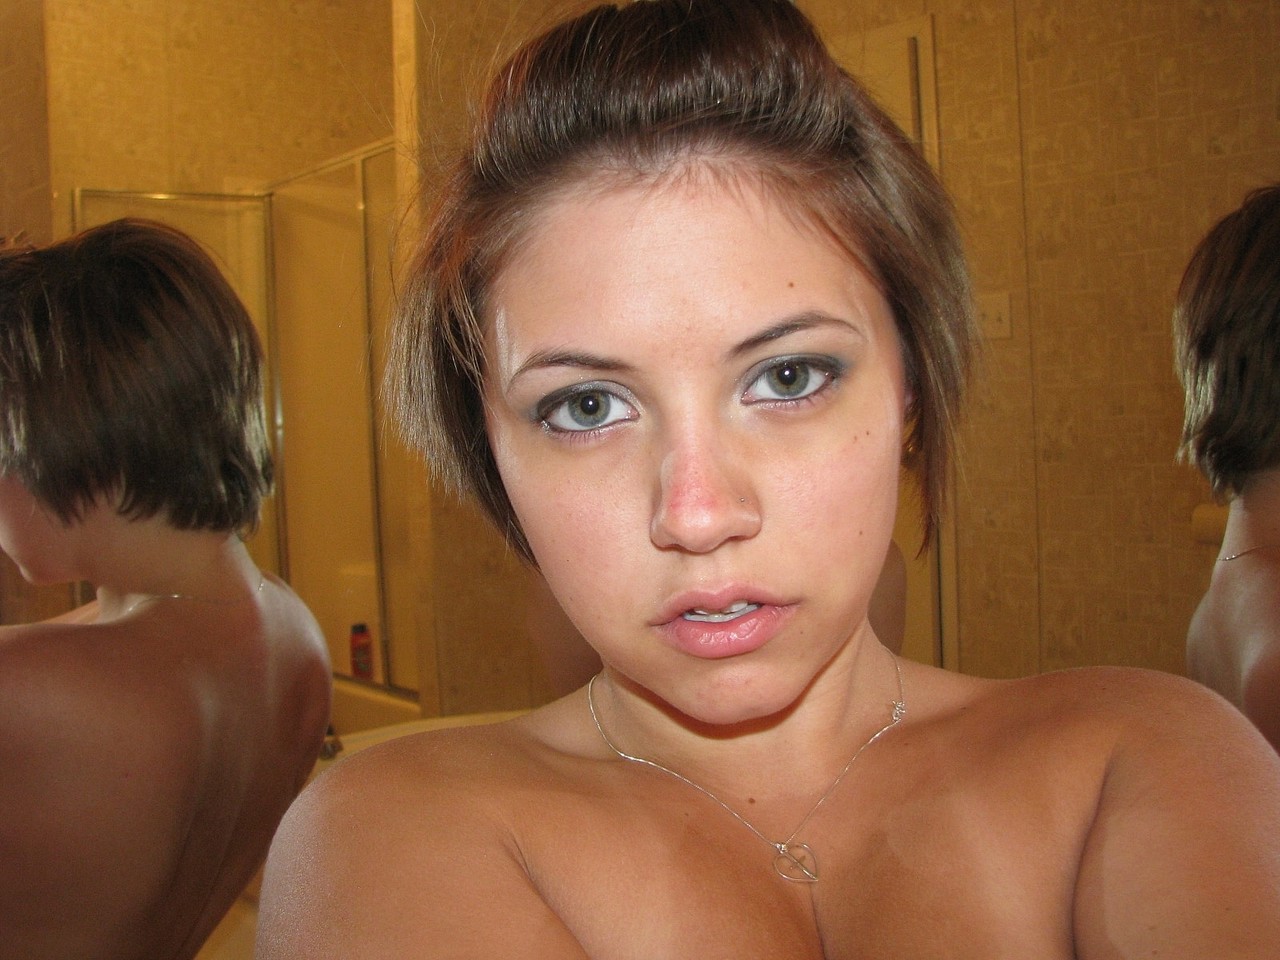 Sexy teen amateur shows off her big breasts while taking nude photos porno fotoğrafı #427315190 | Teen Girl Photos Pics, Amateur, mobil porno